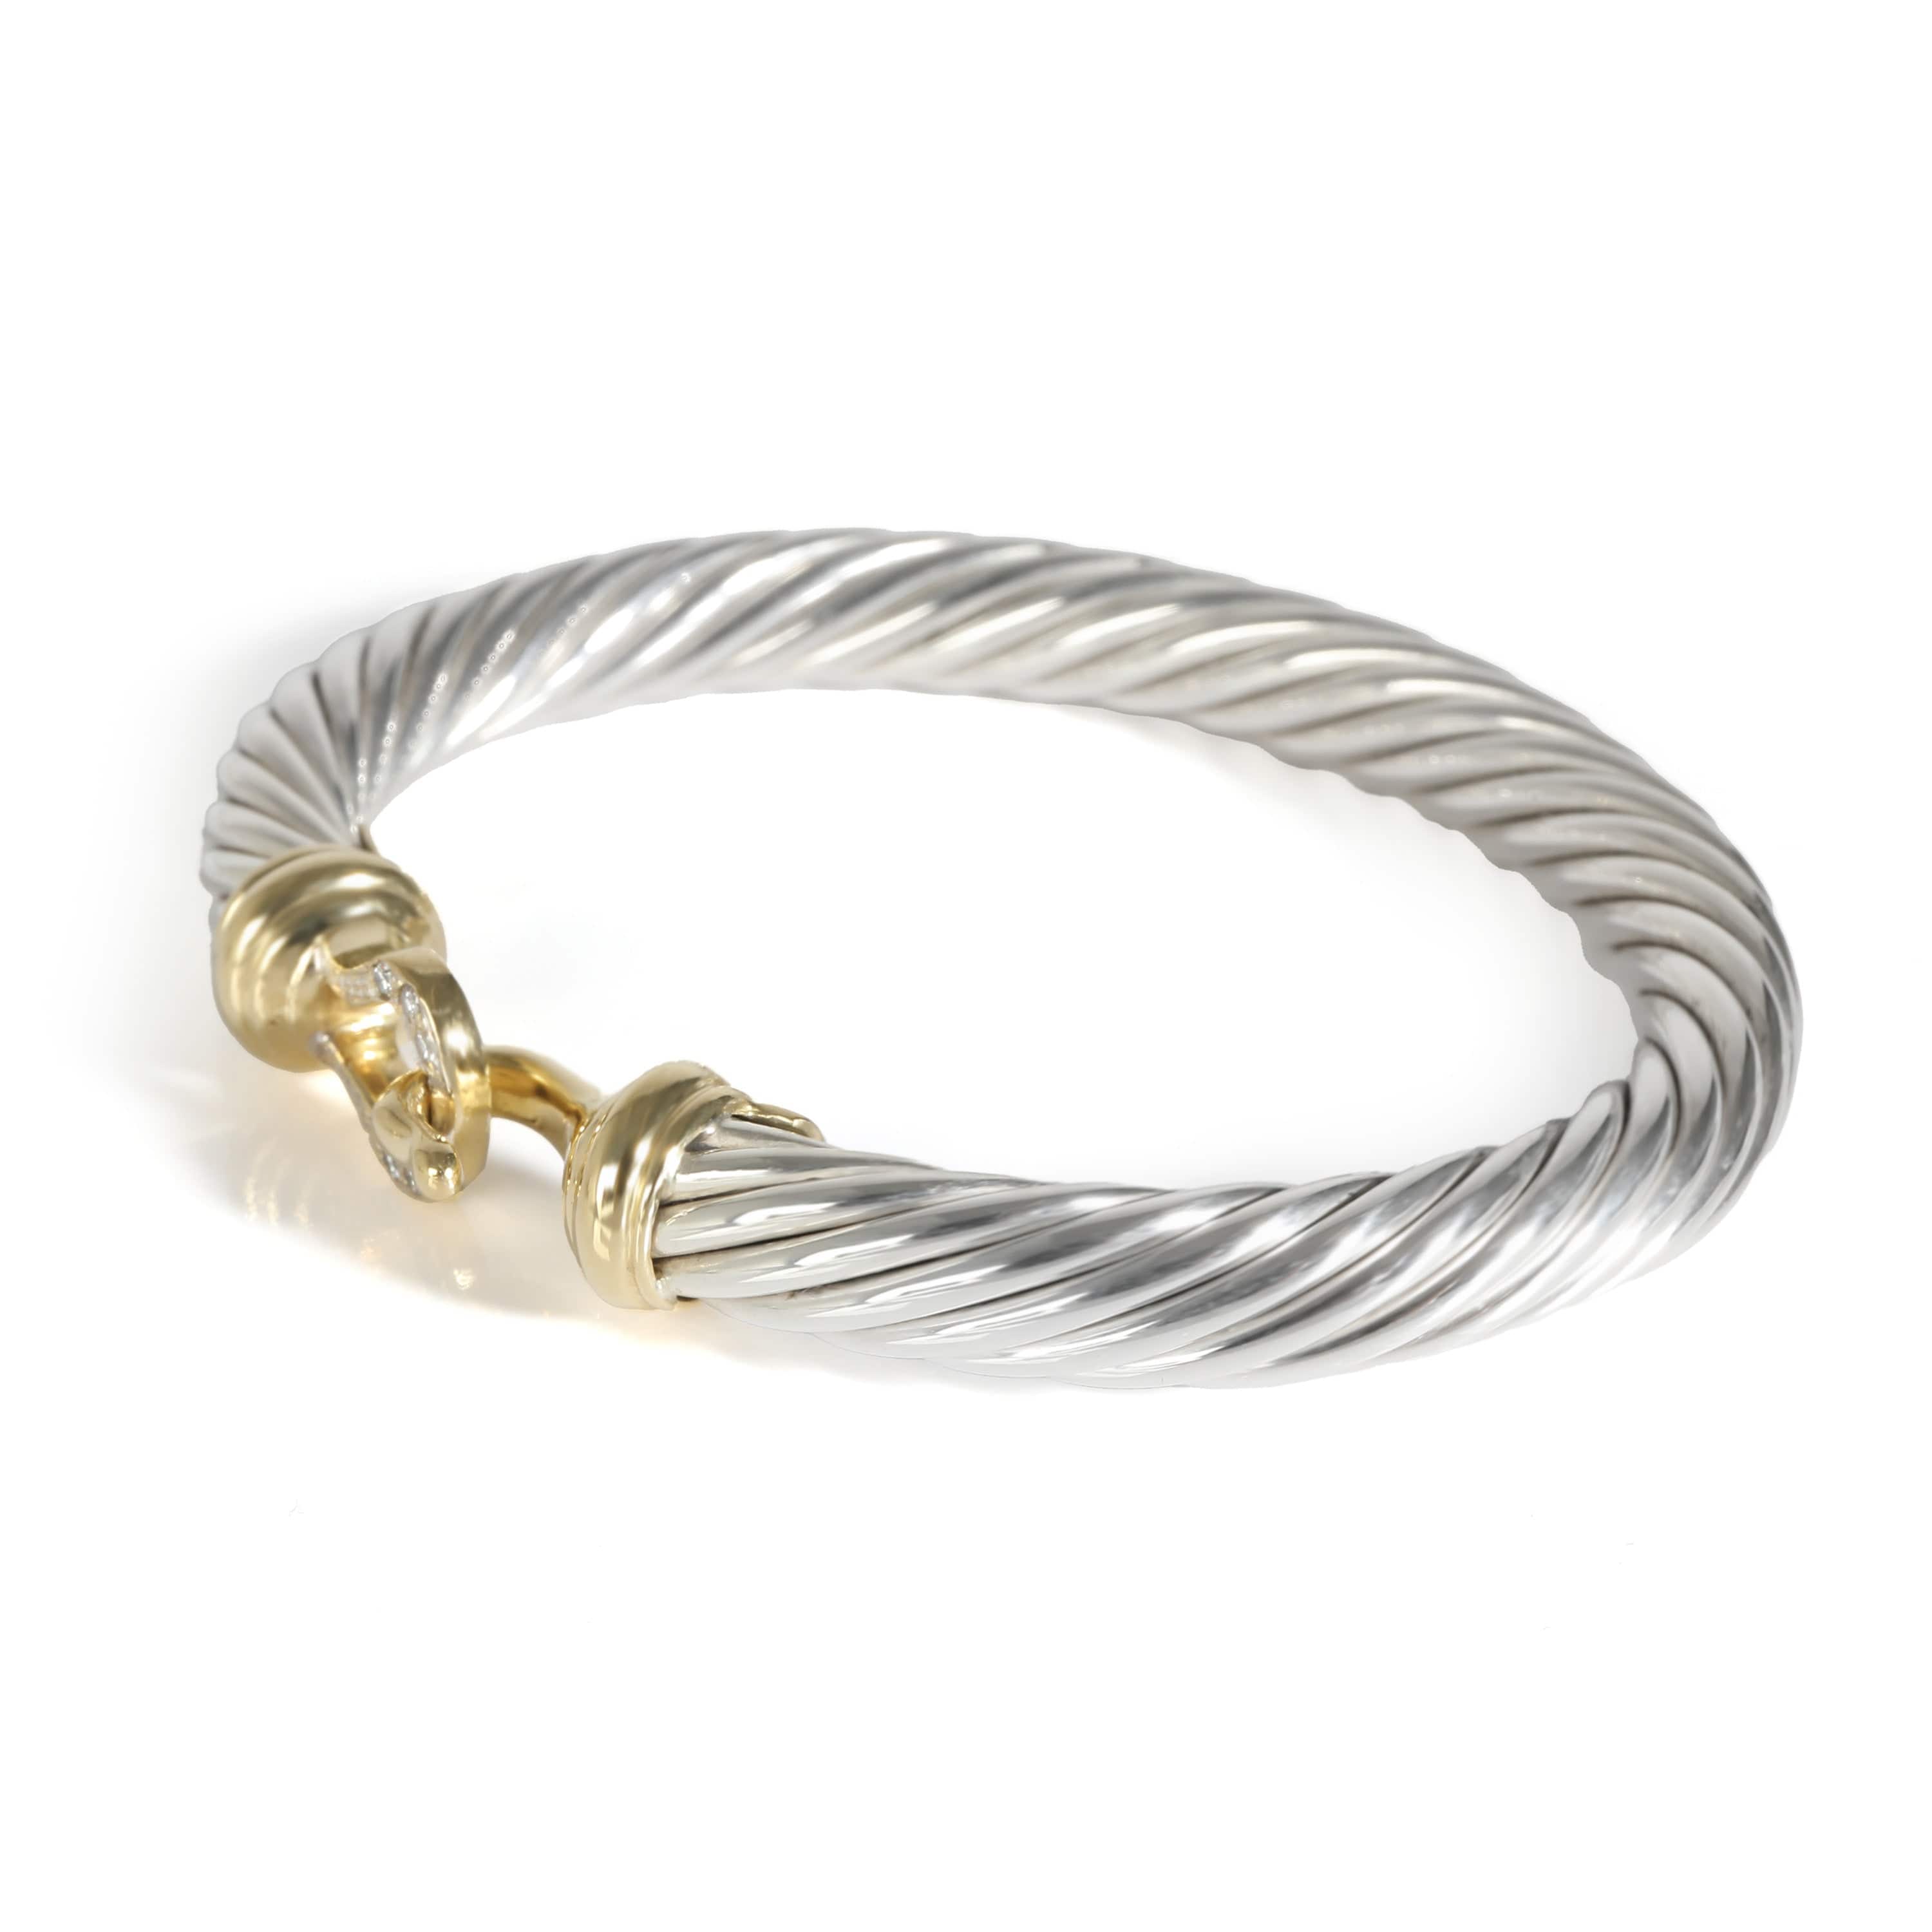 David Yurman David Yurman Cable Buckle Bracelet in 18k Yellow Gold/Sterling Silver 0.06 CTW